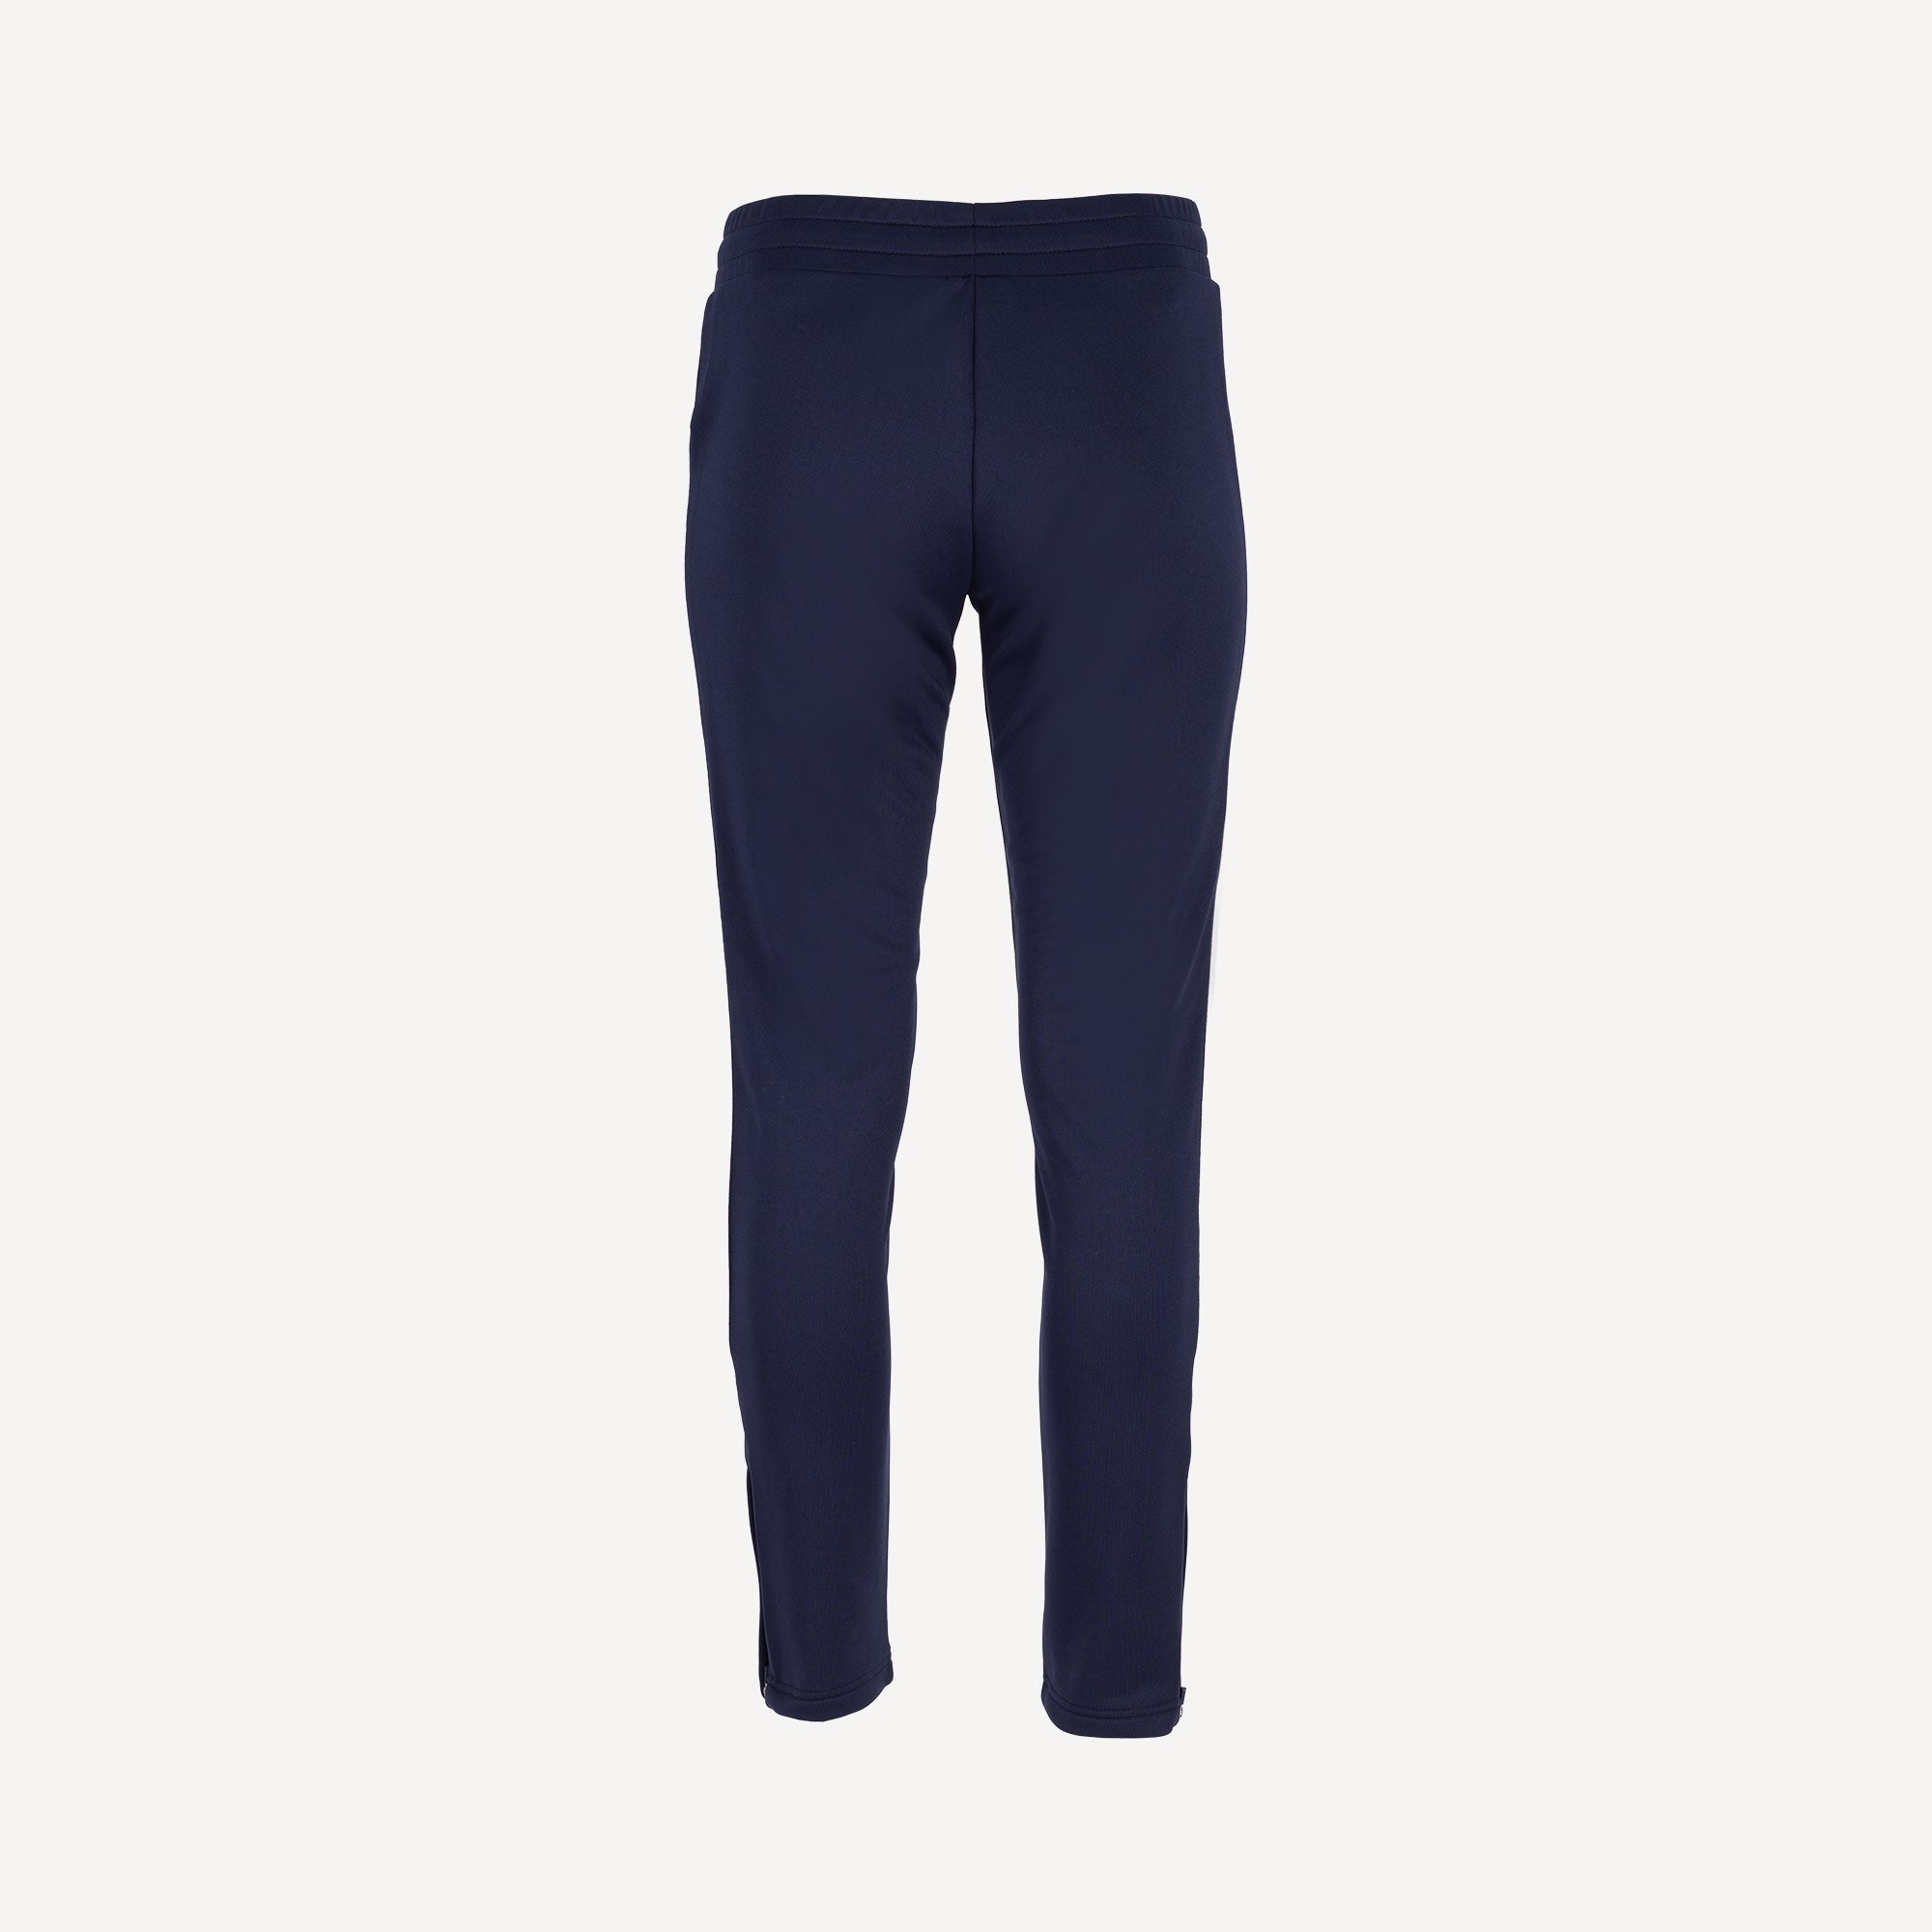 Fila Janice Women's Tennis Pants - Dark Blue (2)